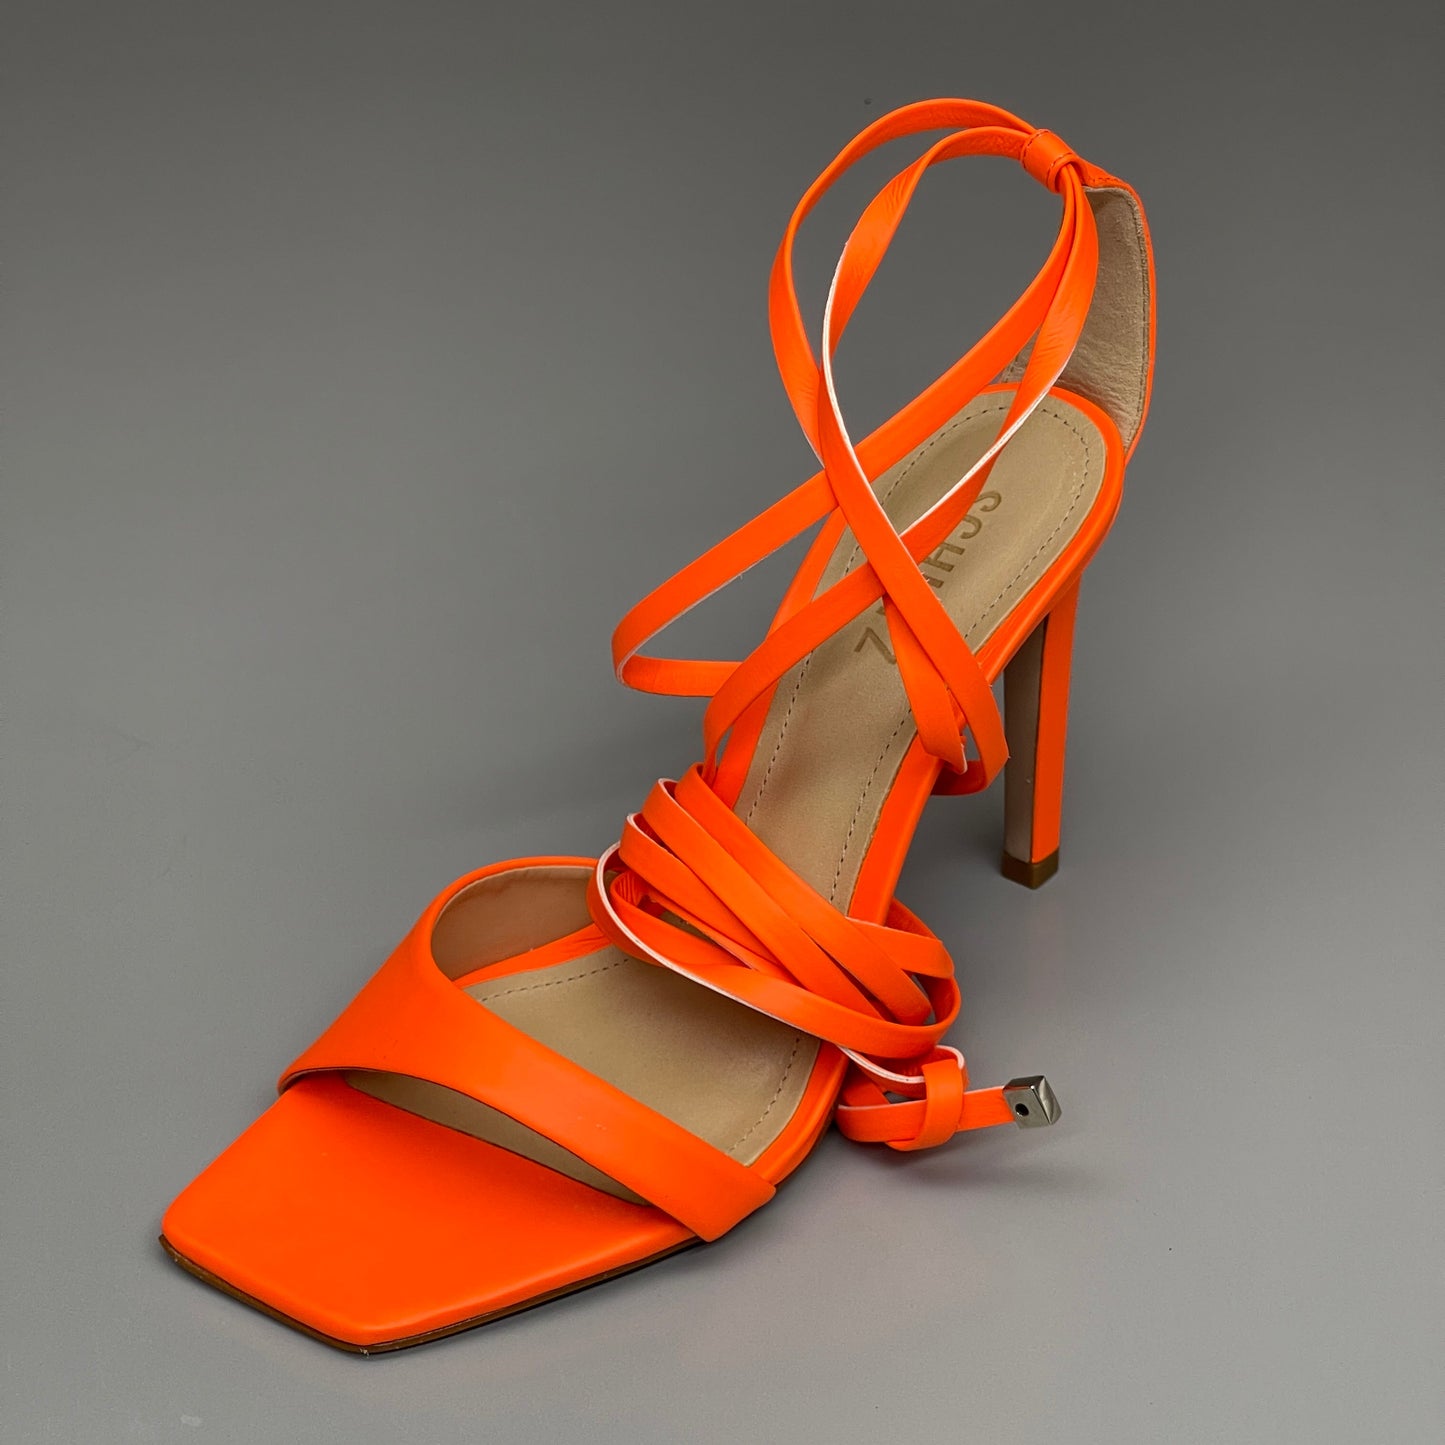 SCHUTZ Bryce Ankle Tie Women's High Heel Leather Strappy Sandal Acid Orange Sz 5 (New)